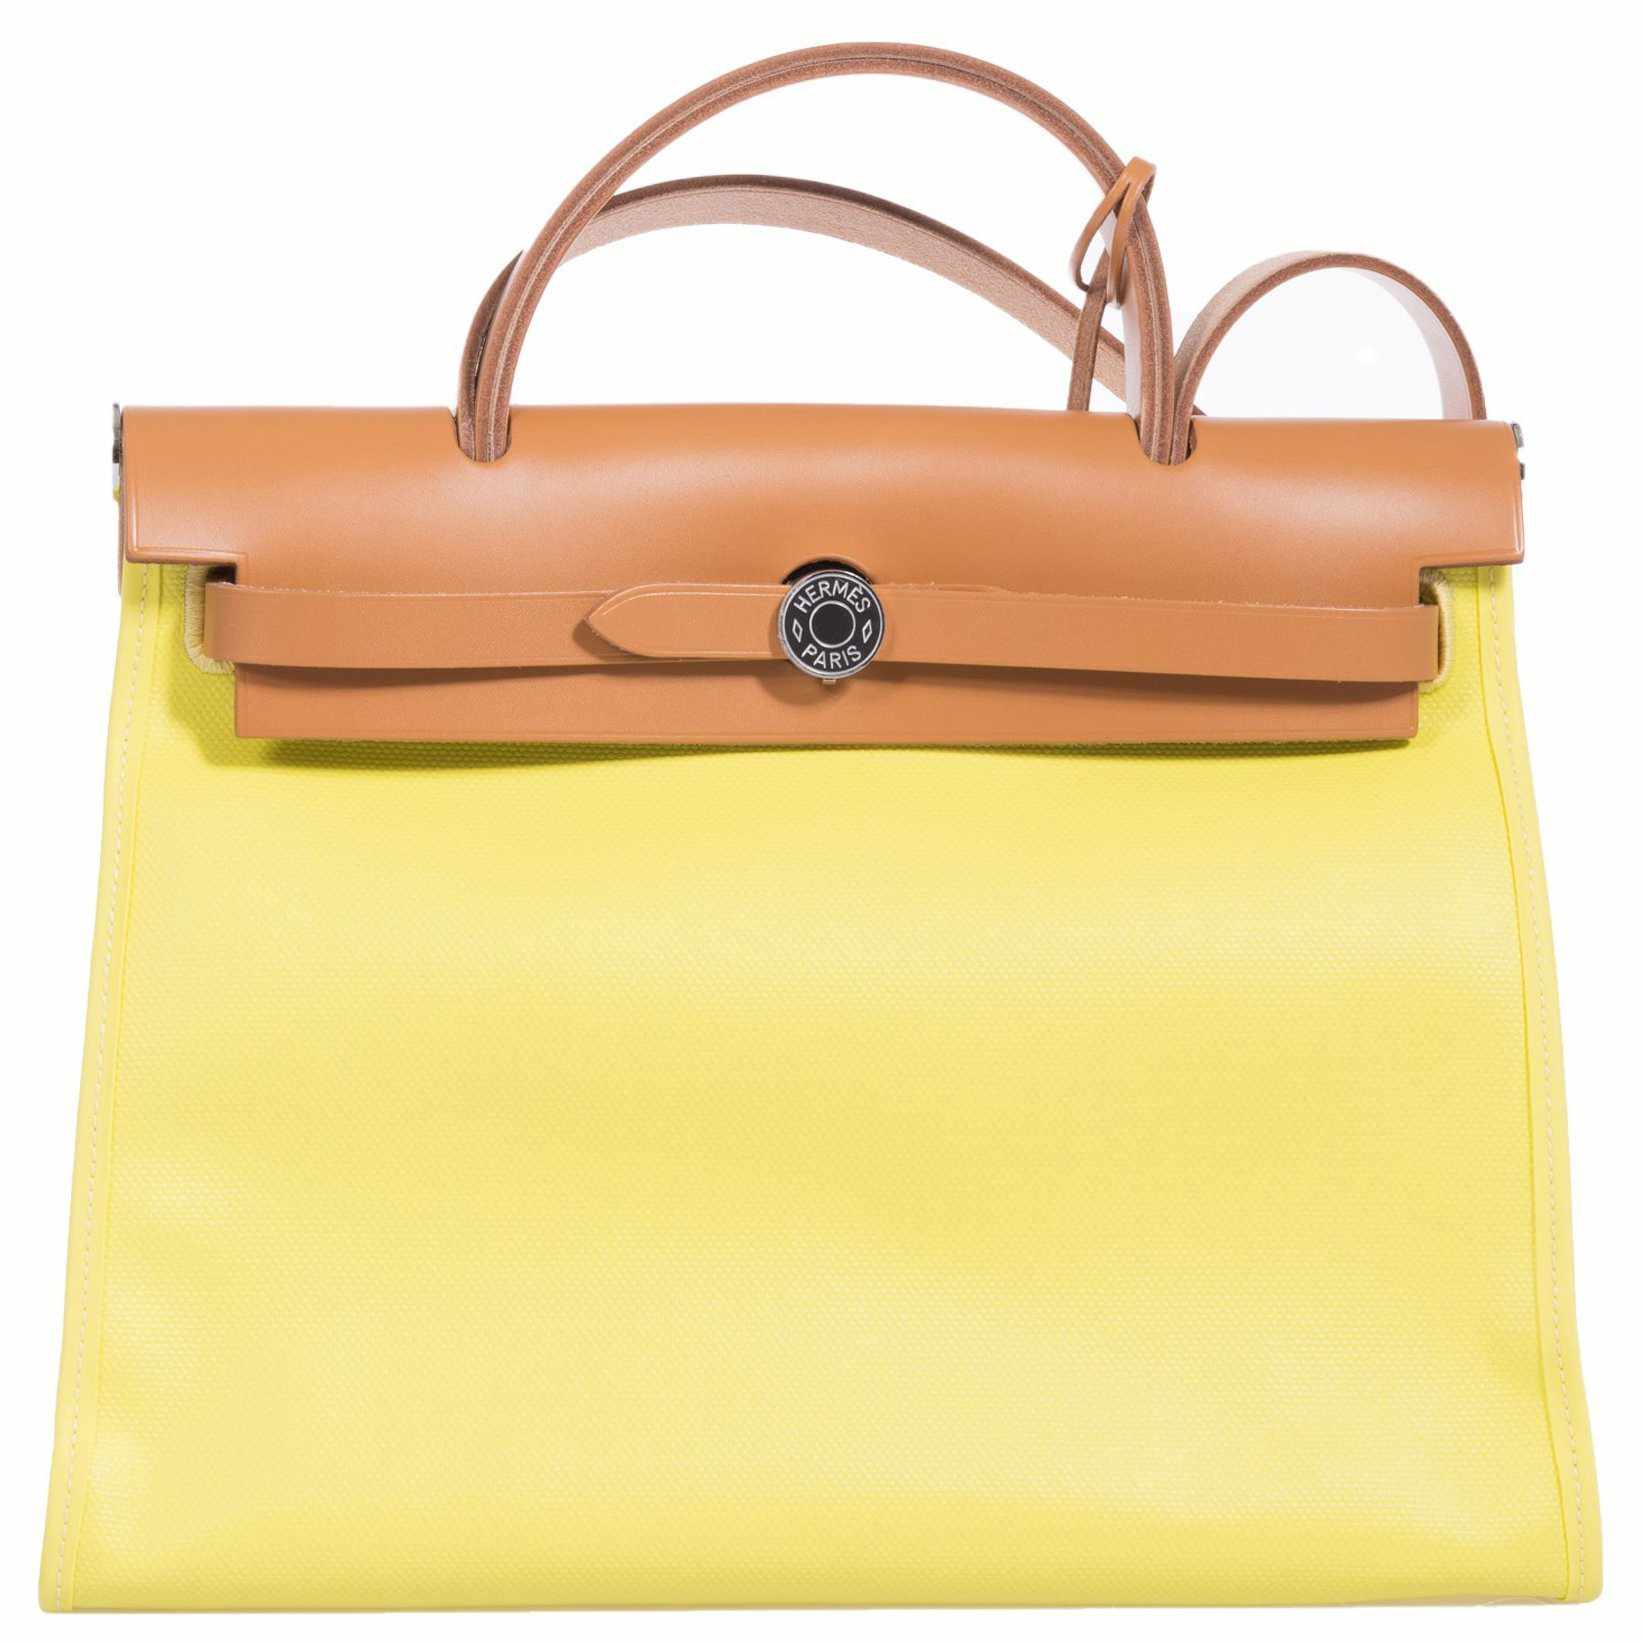 My Bag - Herbag, Swiss fashion blog